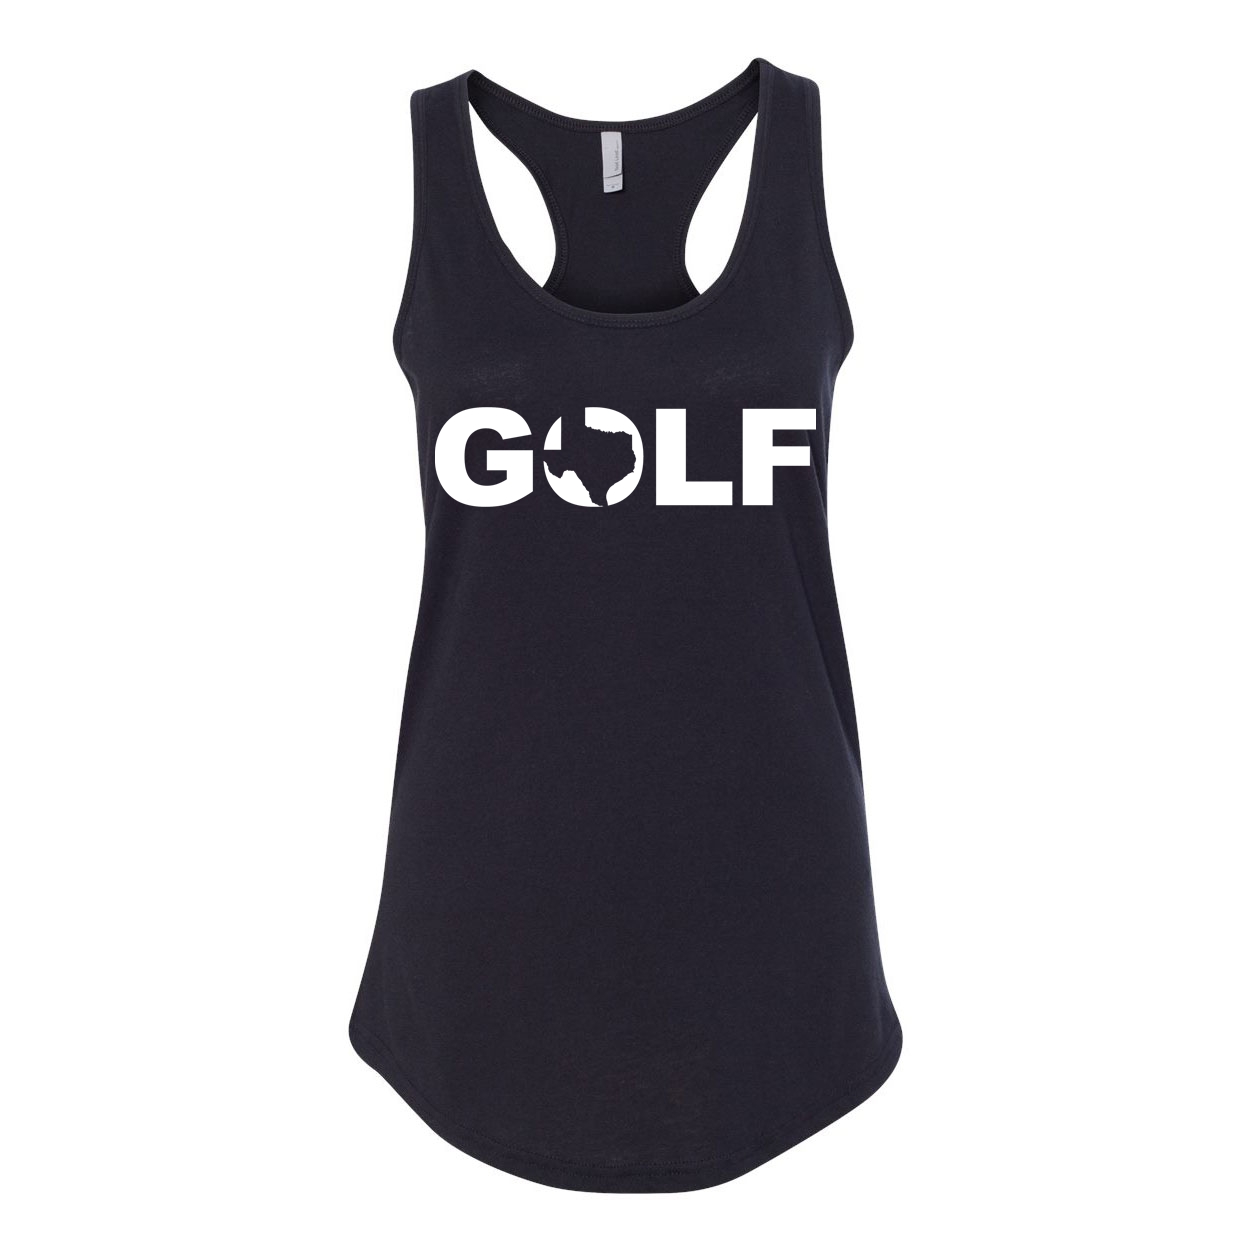 Golf Texas Classic Women's Racerback Tank Top Black (White Logo)